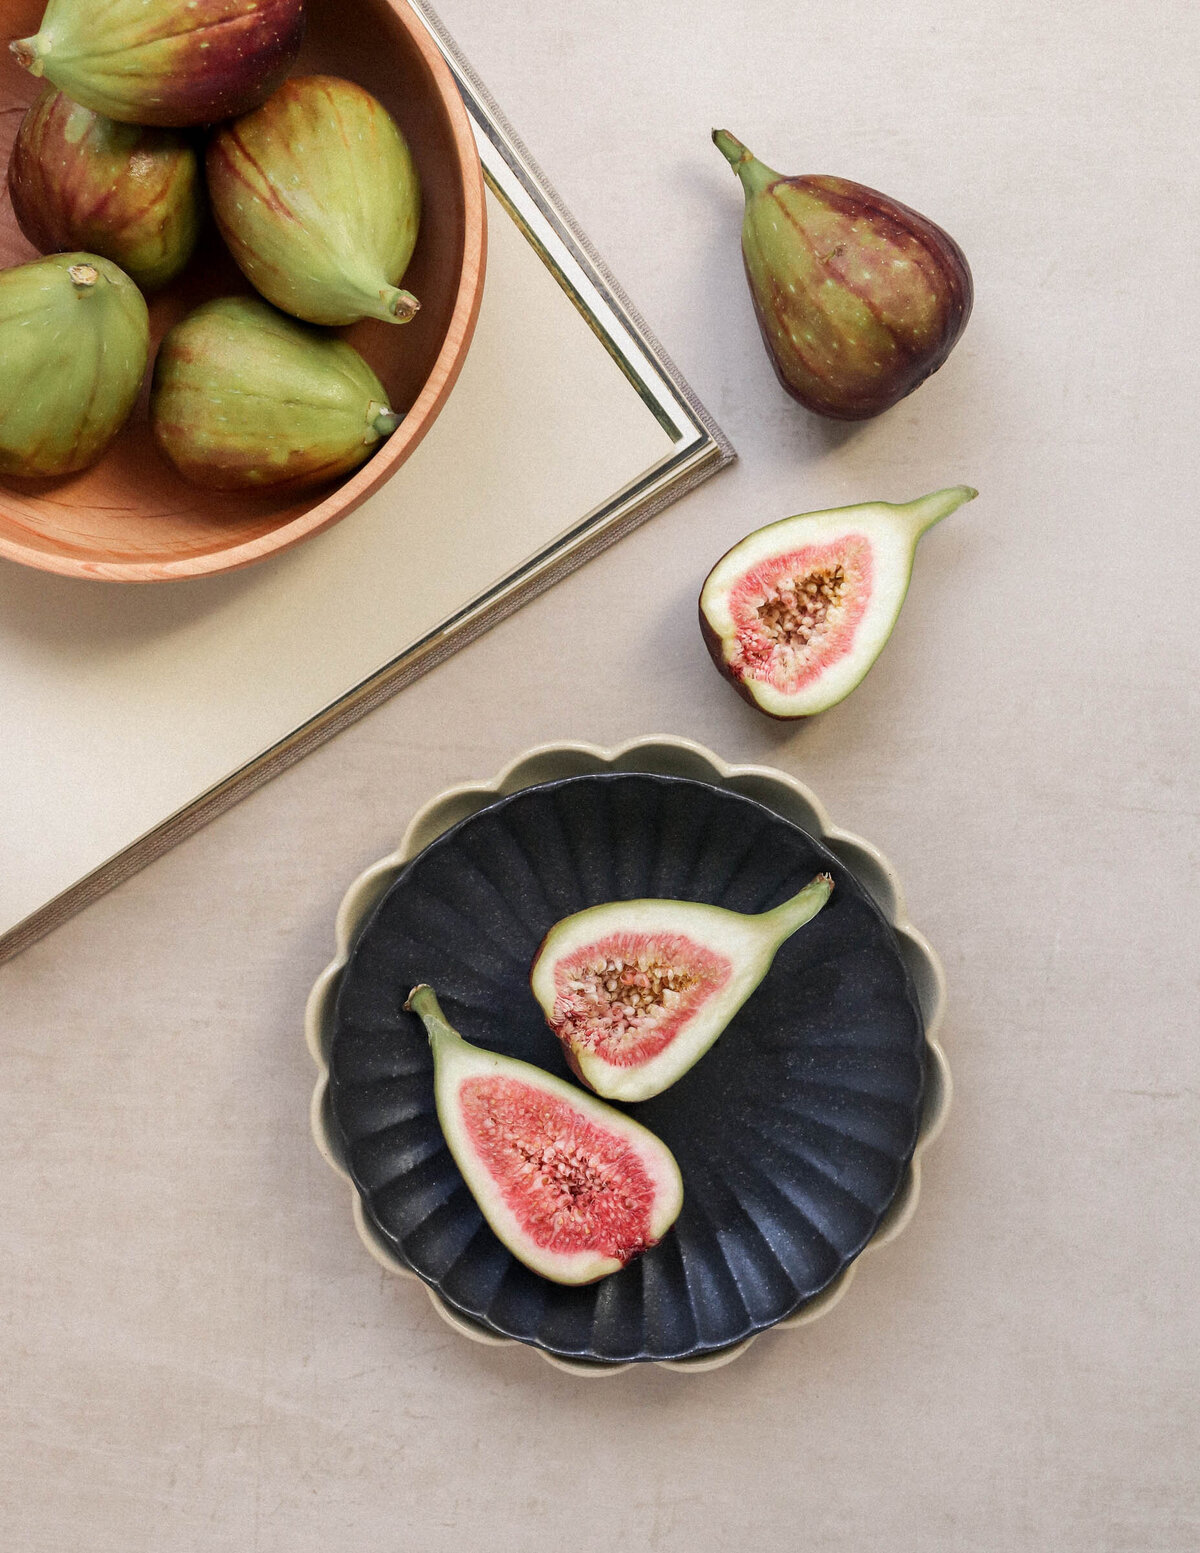 Figs cut in halves in a ornate black bowl